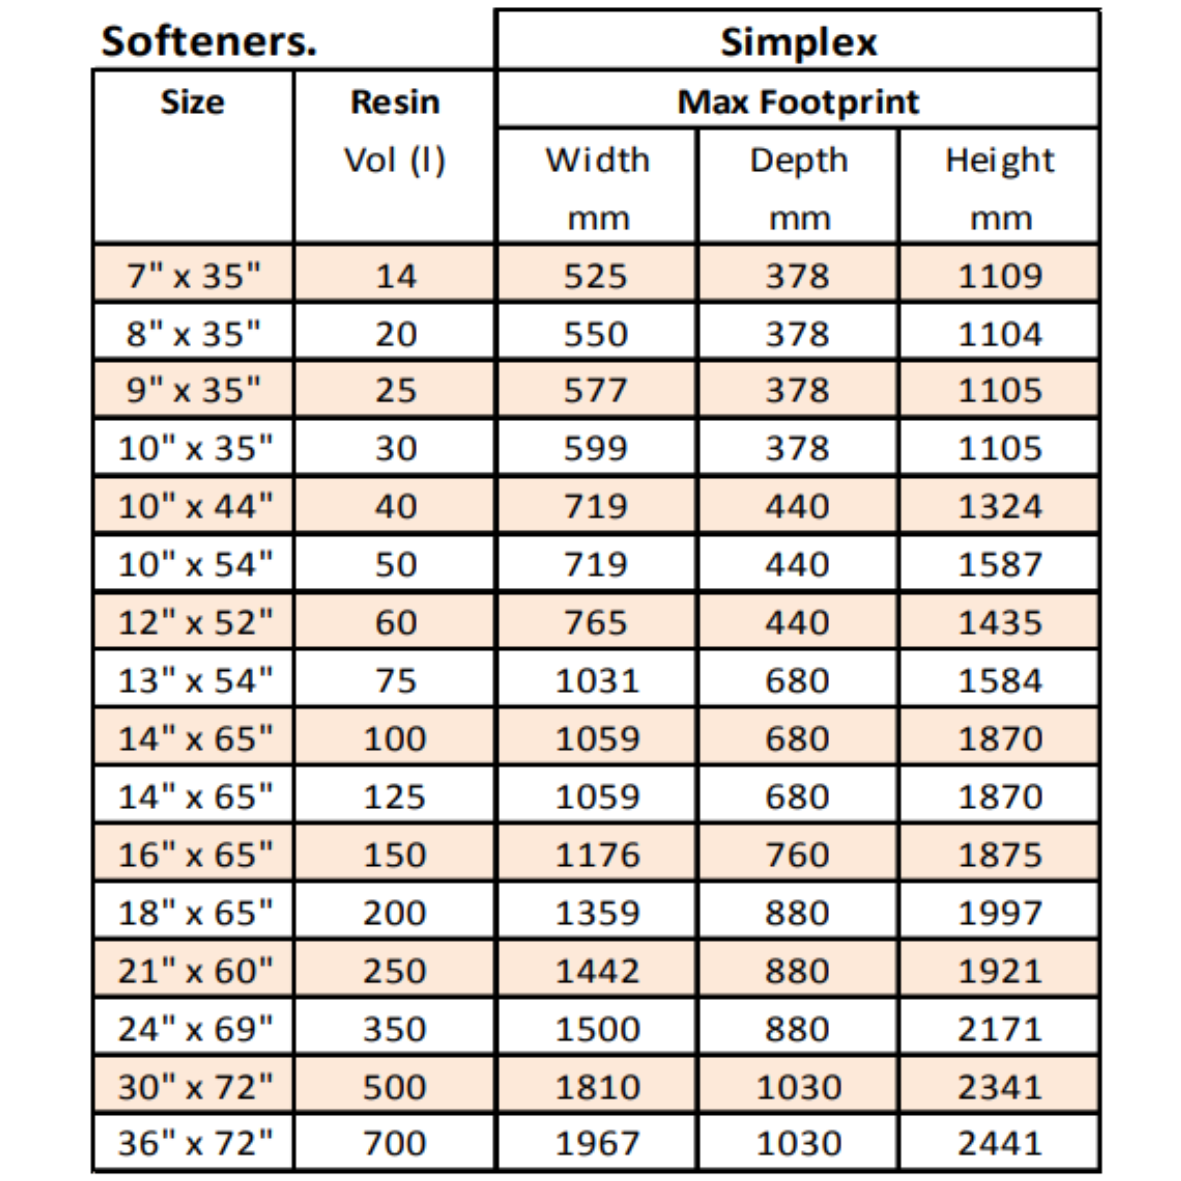 12" x 48", 60L, Simplex Water Softener, Autotrol 255 Time Controller, 2.4m³/hr